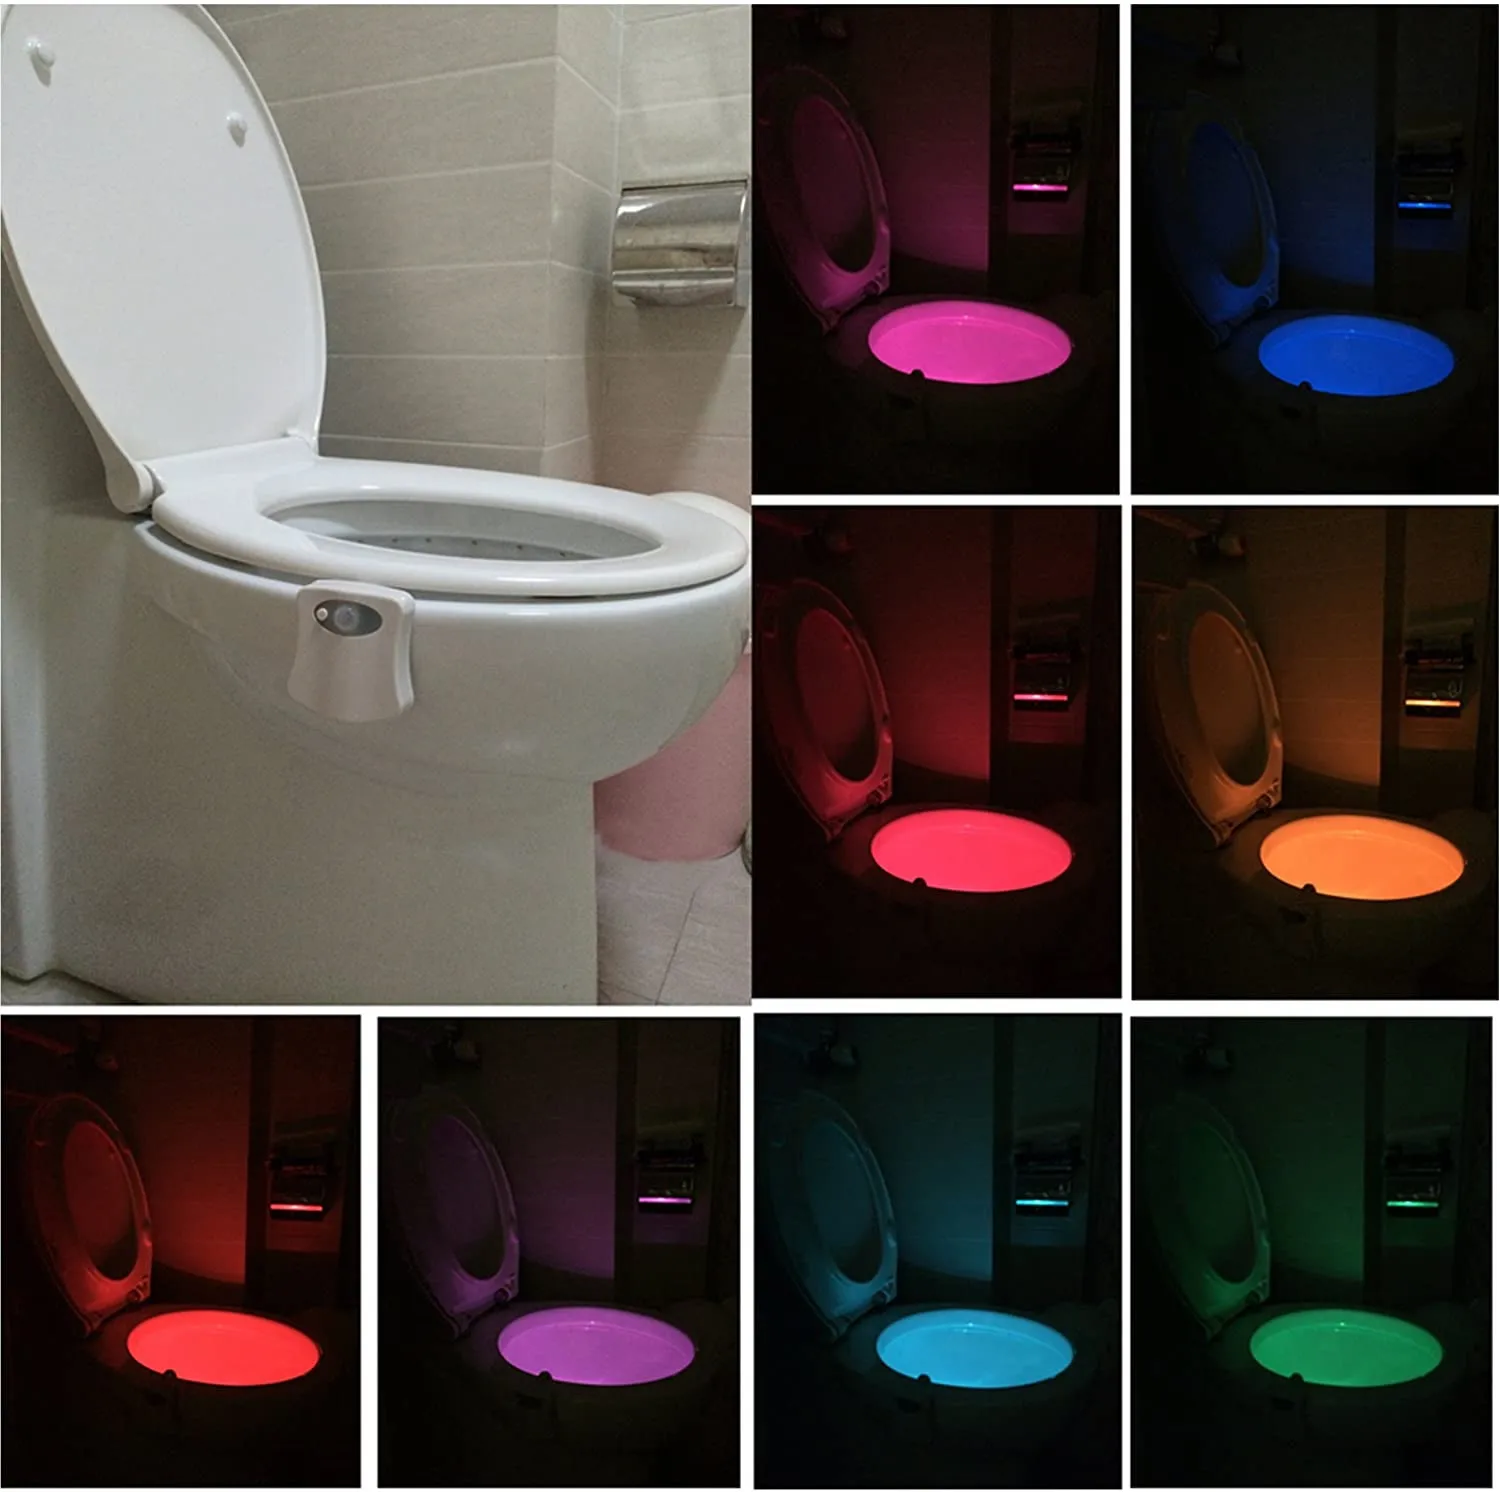 Should You Buy? Lumilux RGB Motion Sensor Toilet Light 